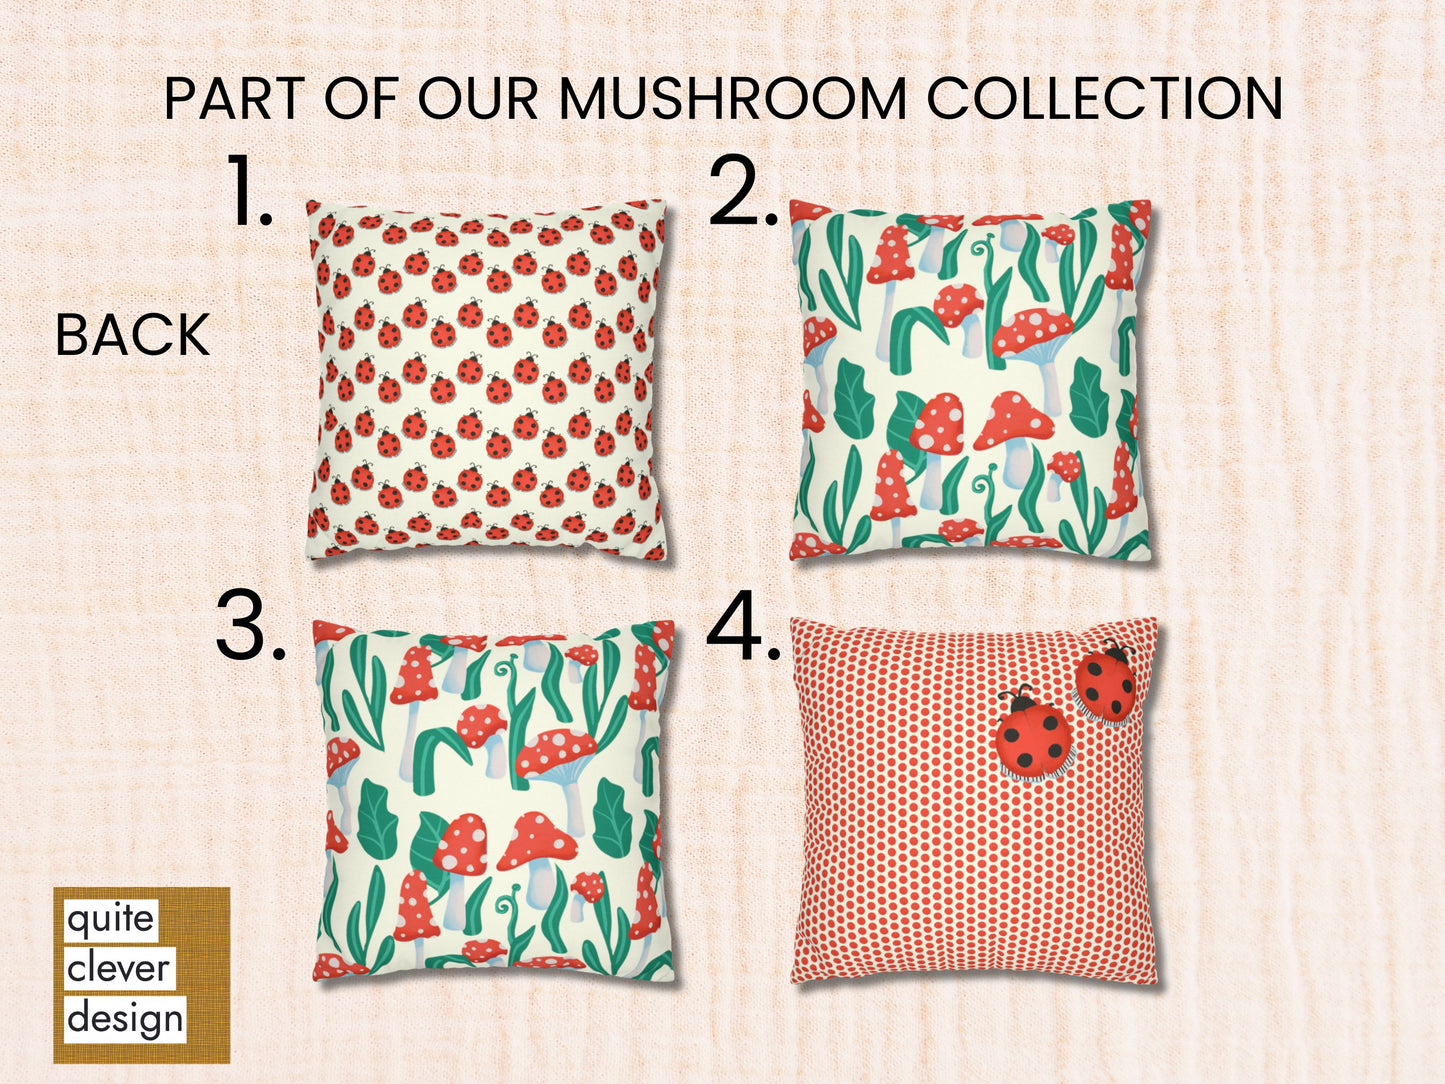 Ladybug Spun Polyester Square Pillowcase, Mushroom Collection Throw Pillow